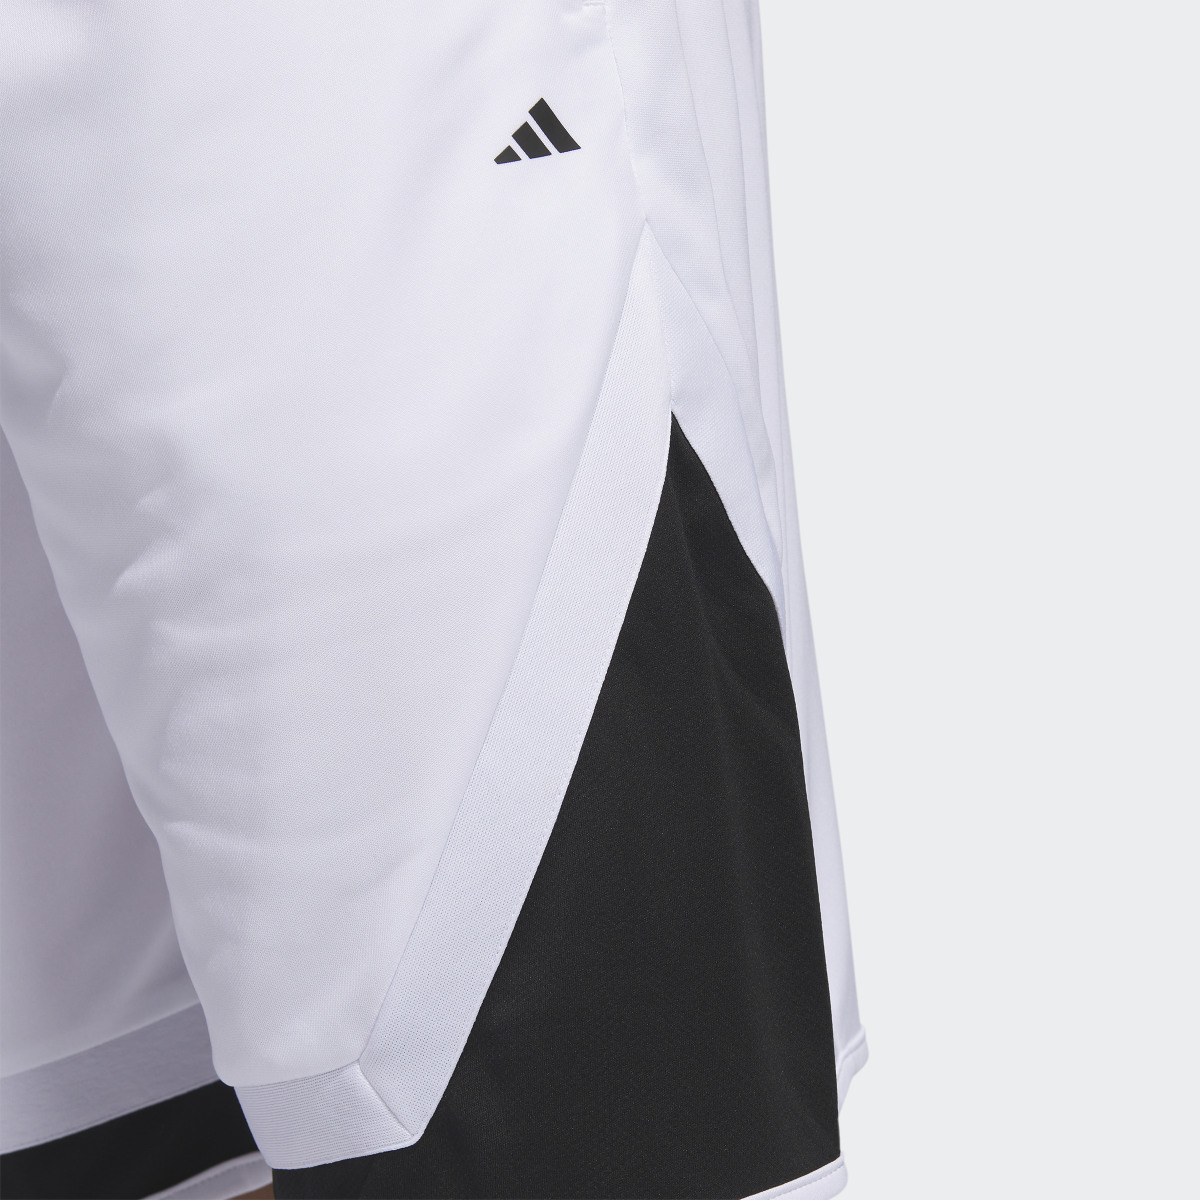 Adidas Pro Block Shorts. 5